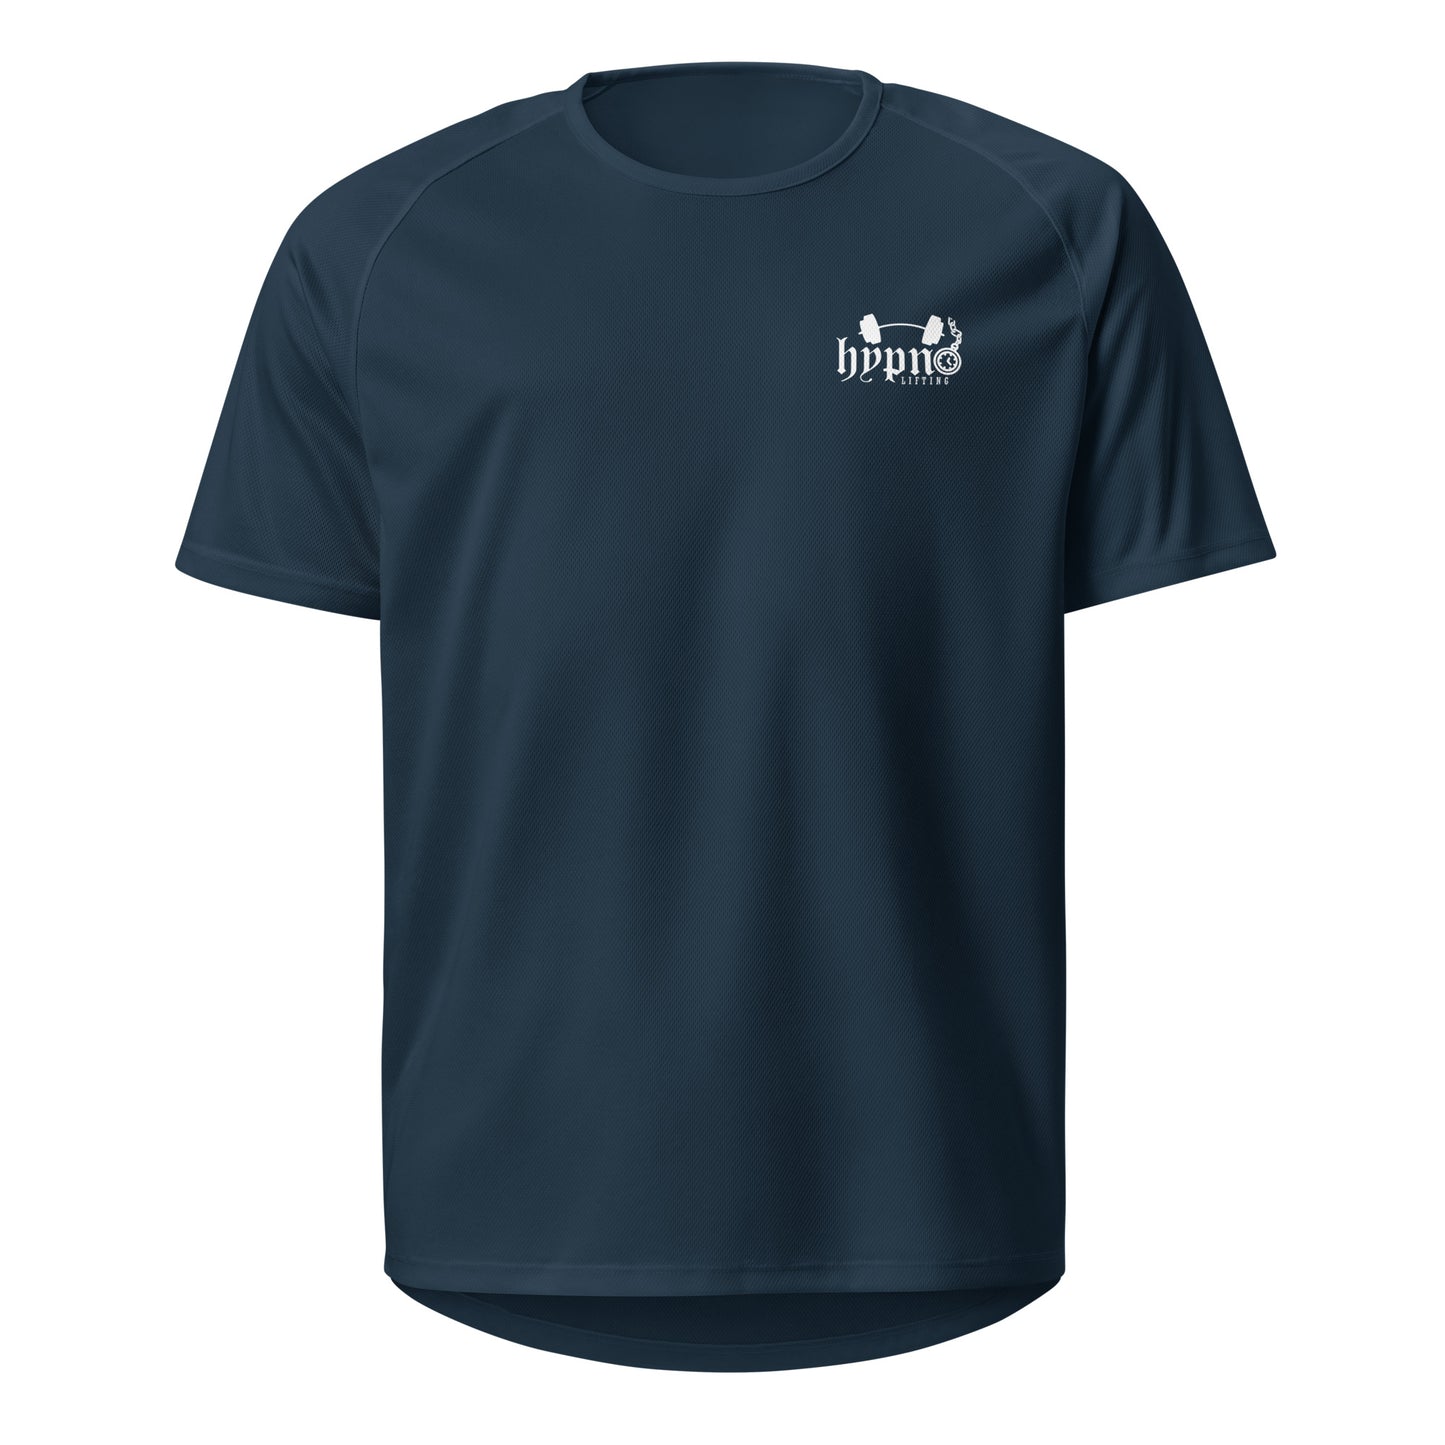 Hypno Lifting Unisex Athletic T-Shirt (White Logo)